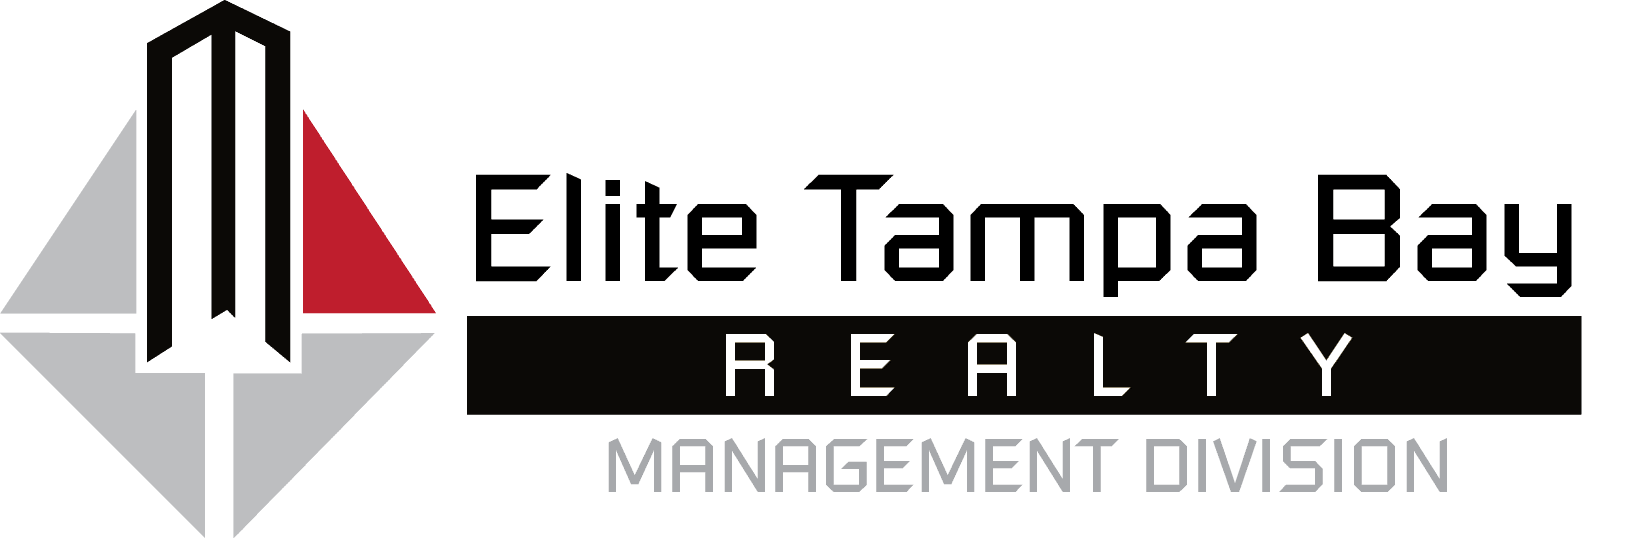 Elite-Management logo